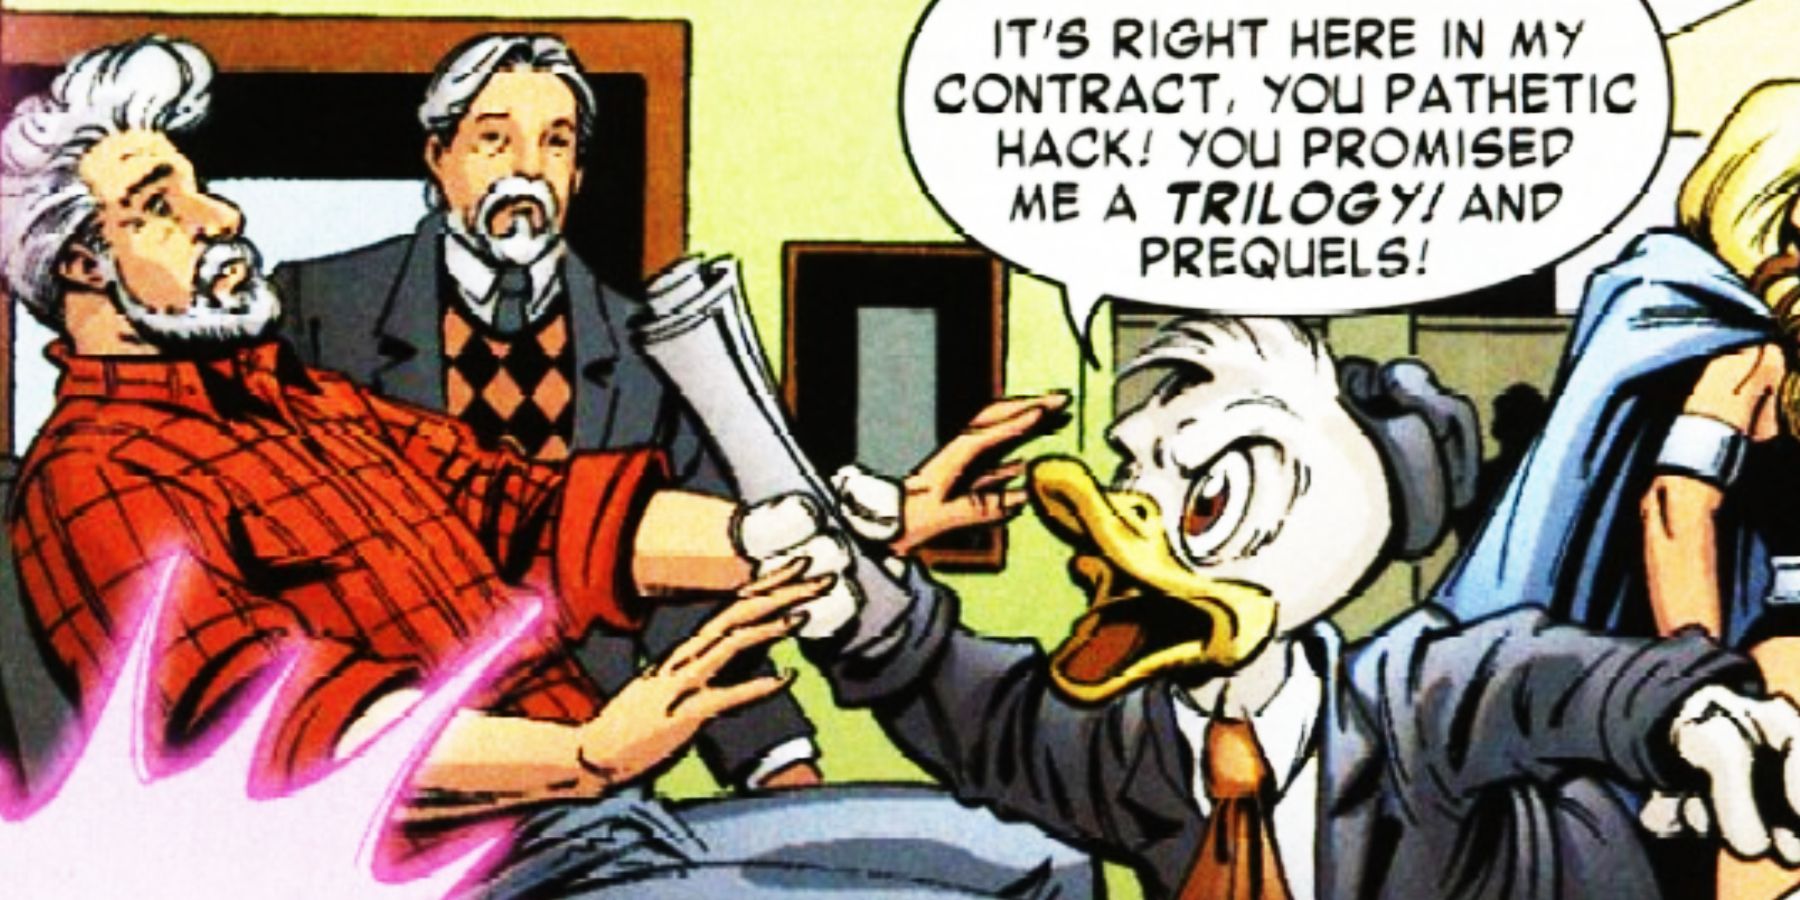 GLKH help Howard the Duck sue George Lucas